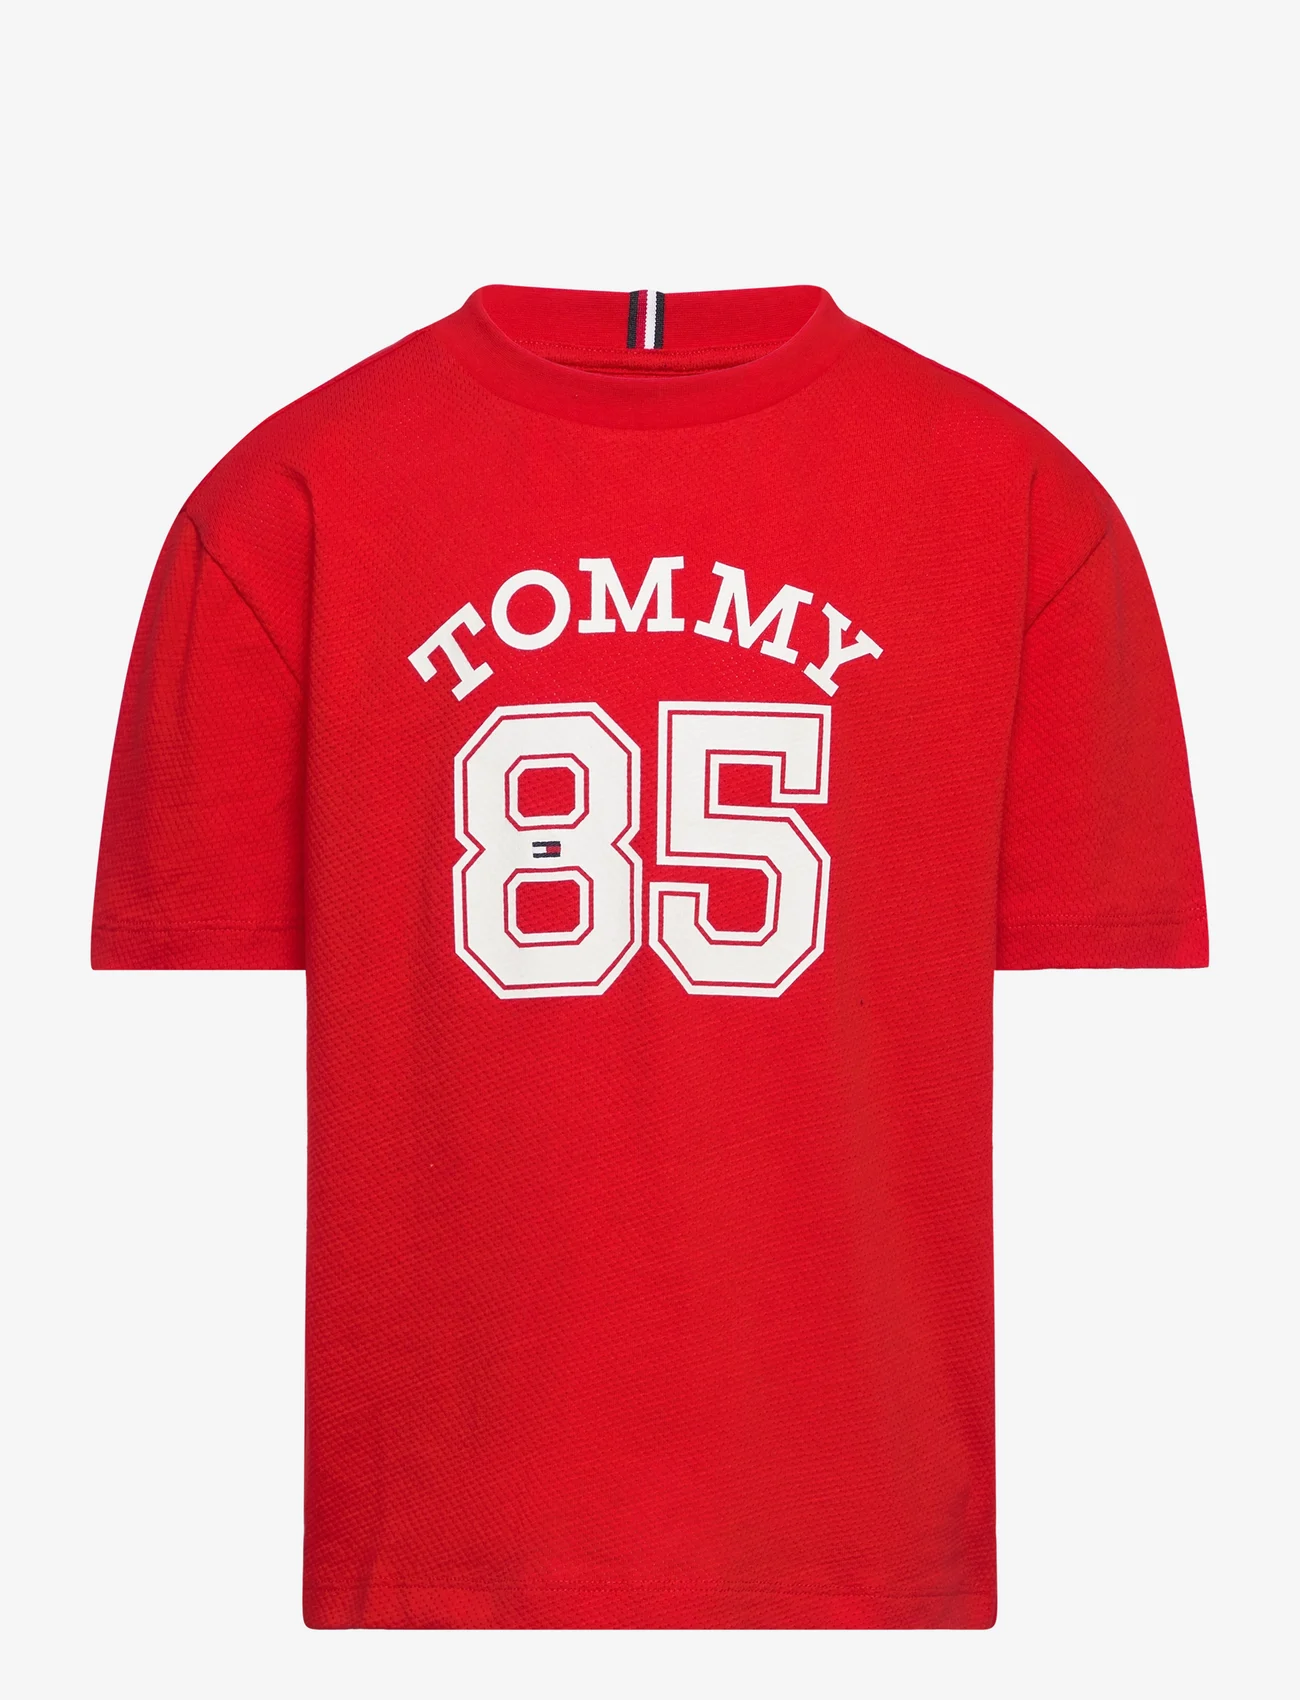 Tommy Hilfiger - MESH VARSITY TEE S/S - kortärmade t-shirts - fierce red - 0